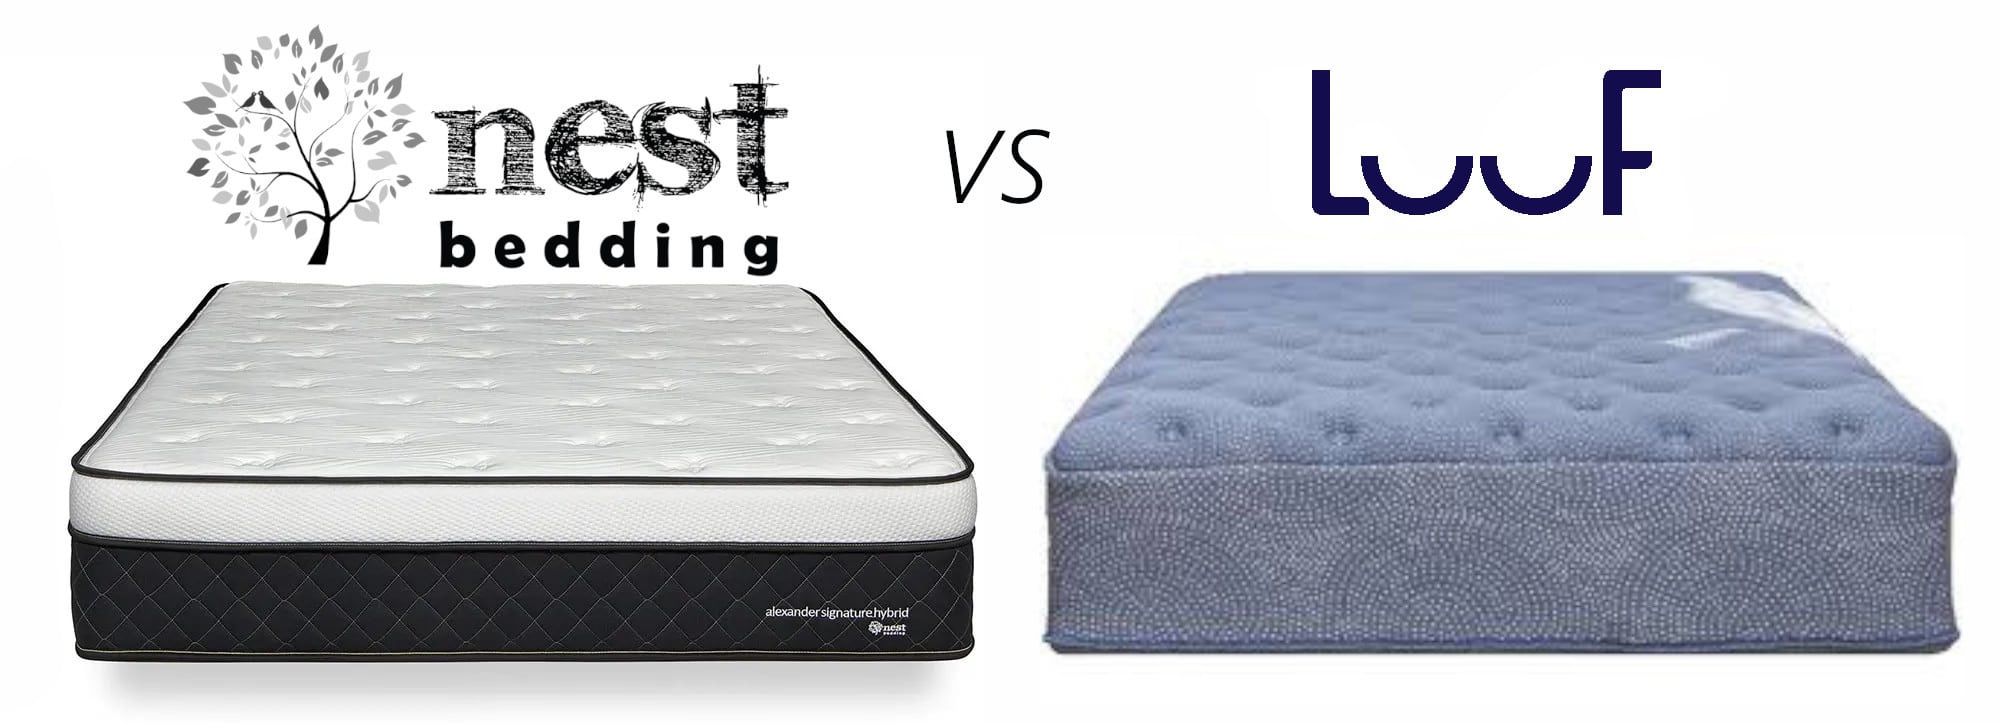 nest bedding alexander hybrid vs luuf mattress comparison review